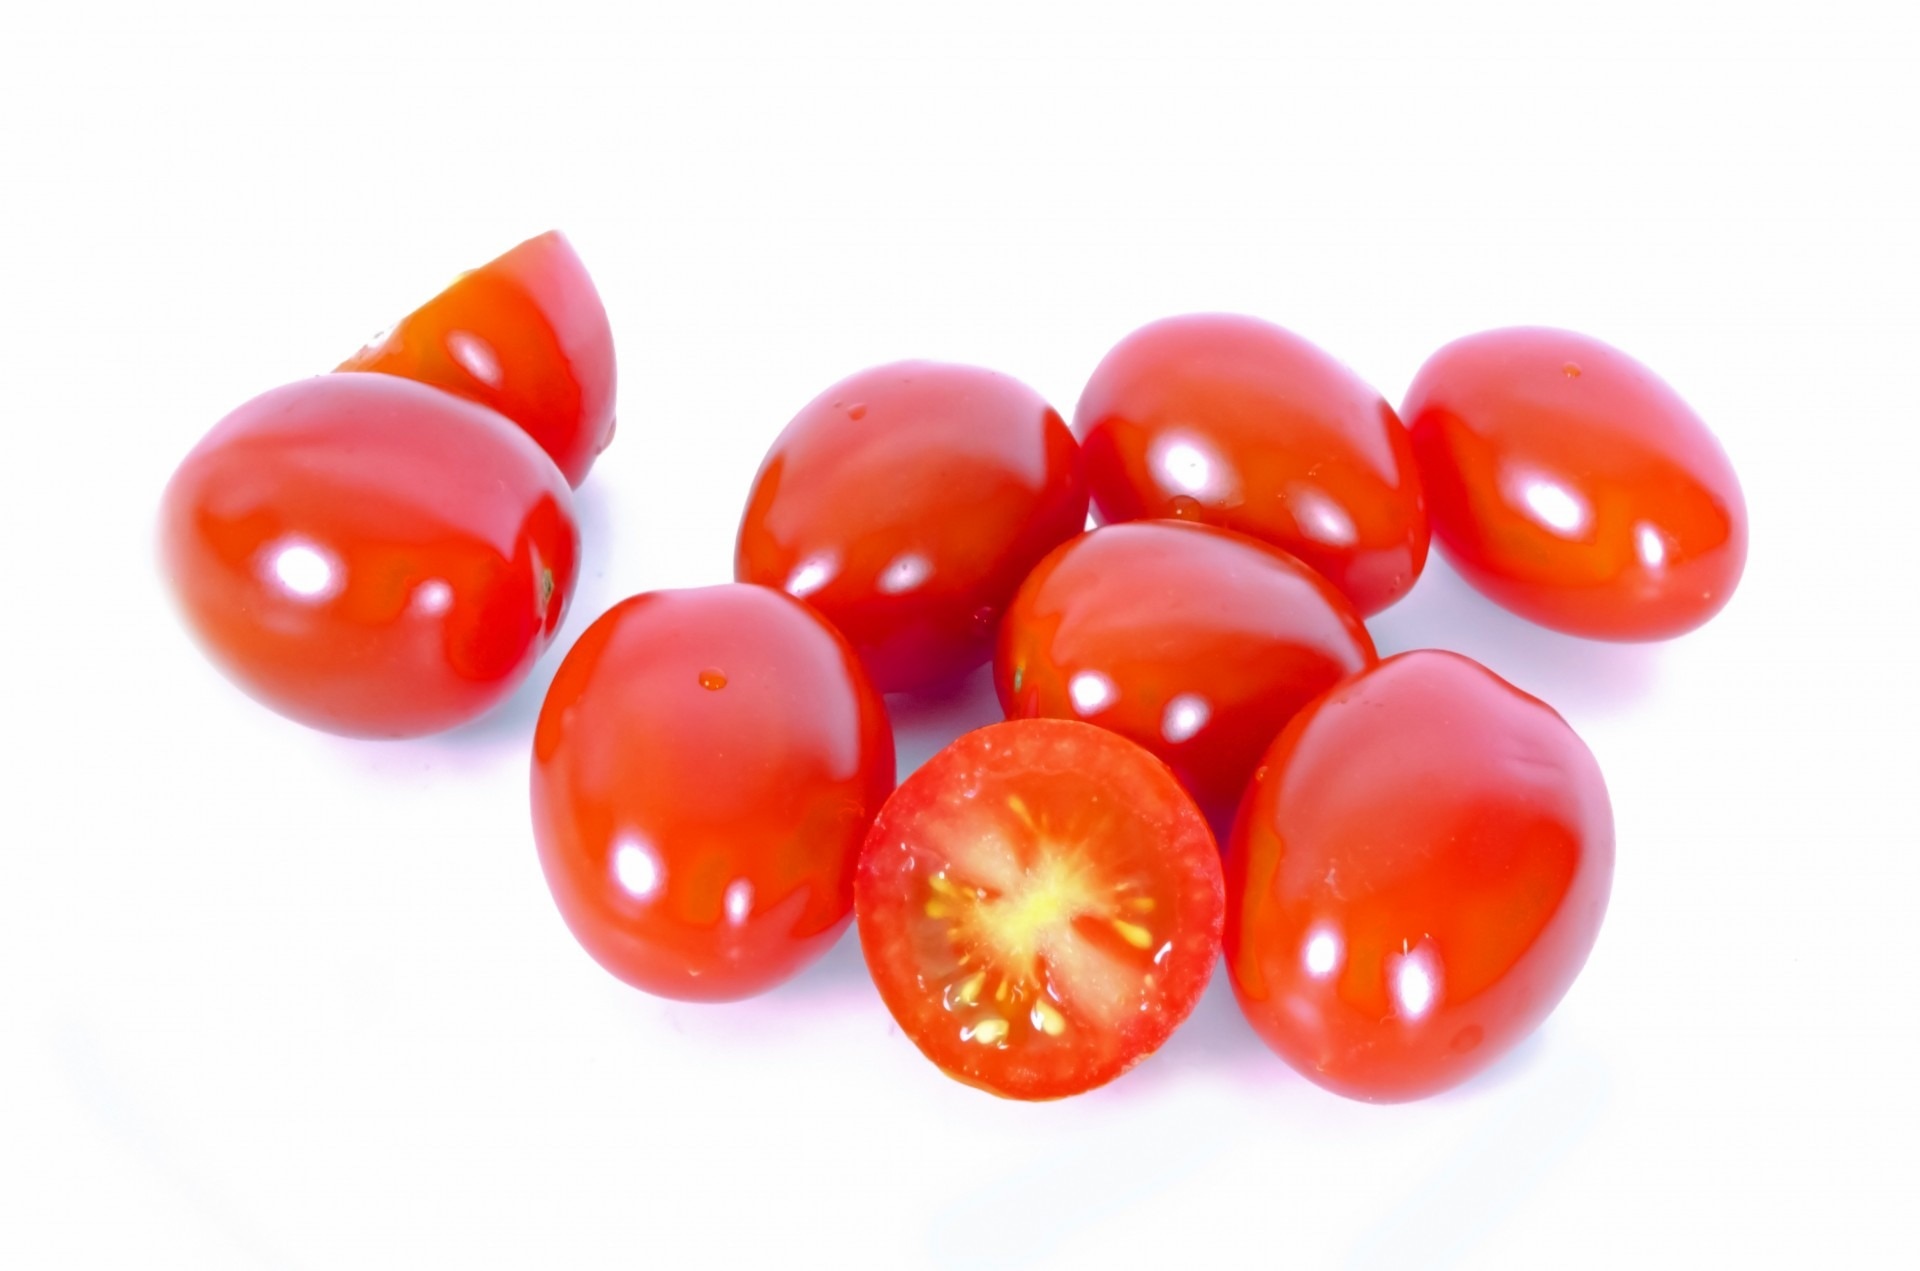 8 baby tomatoes